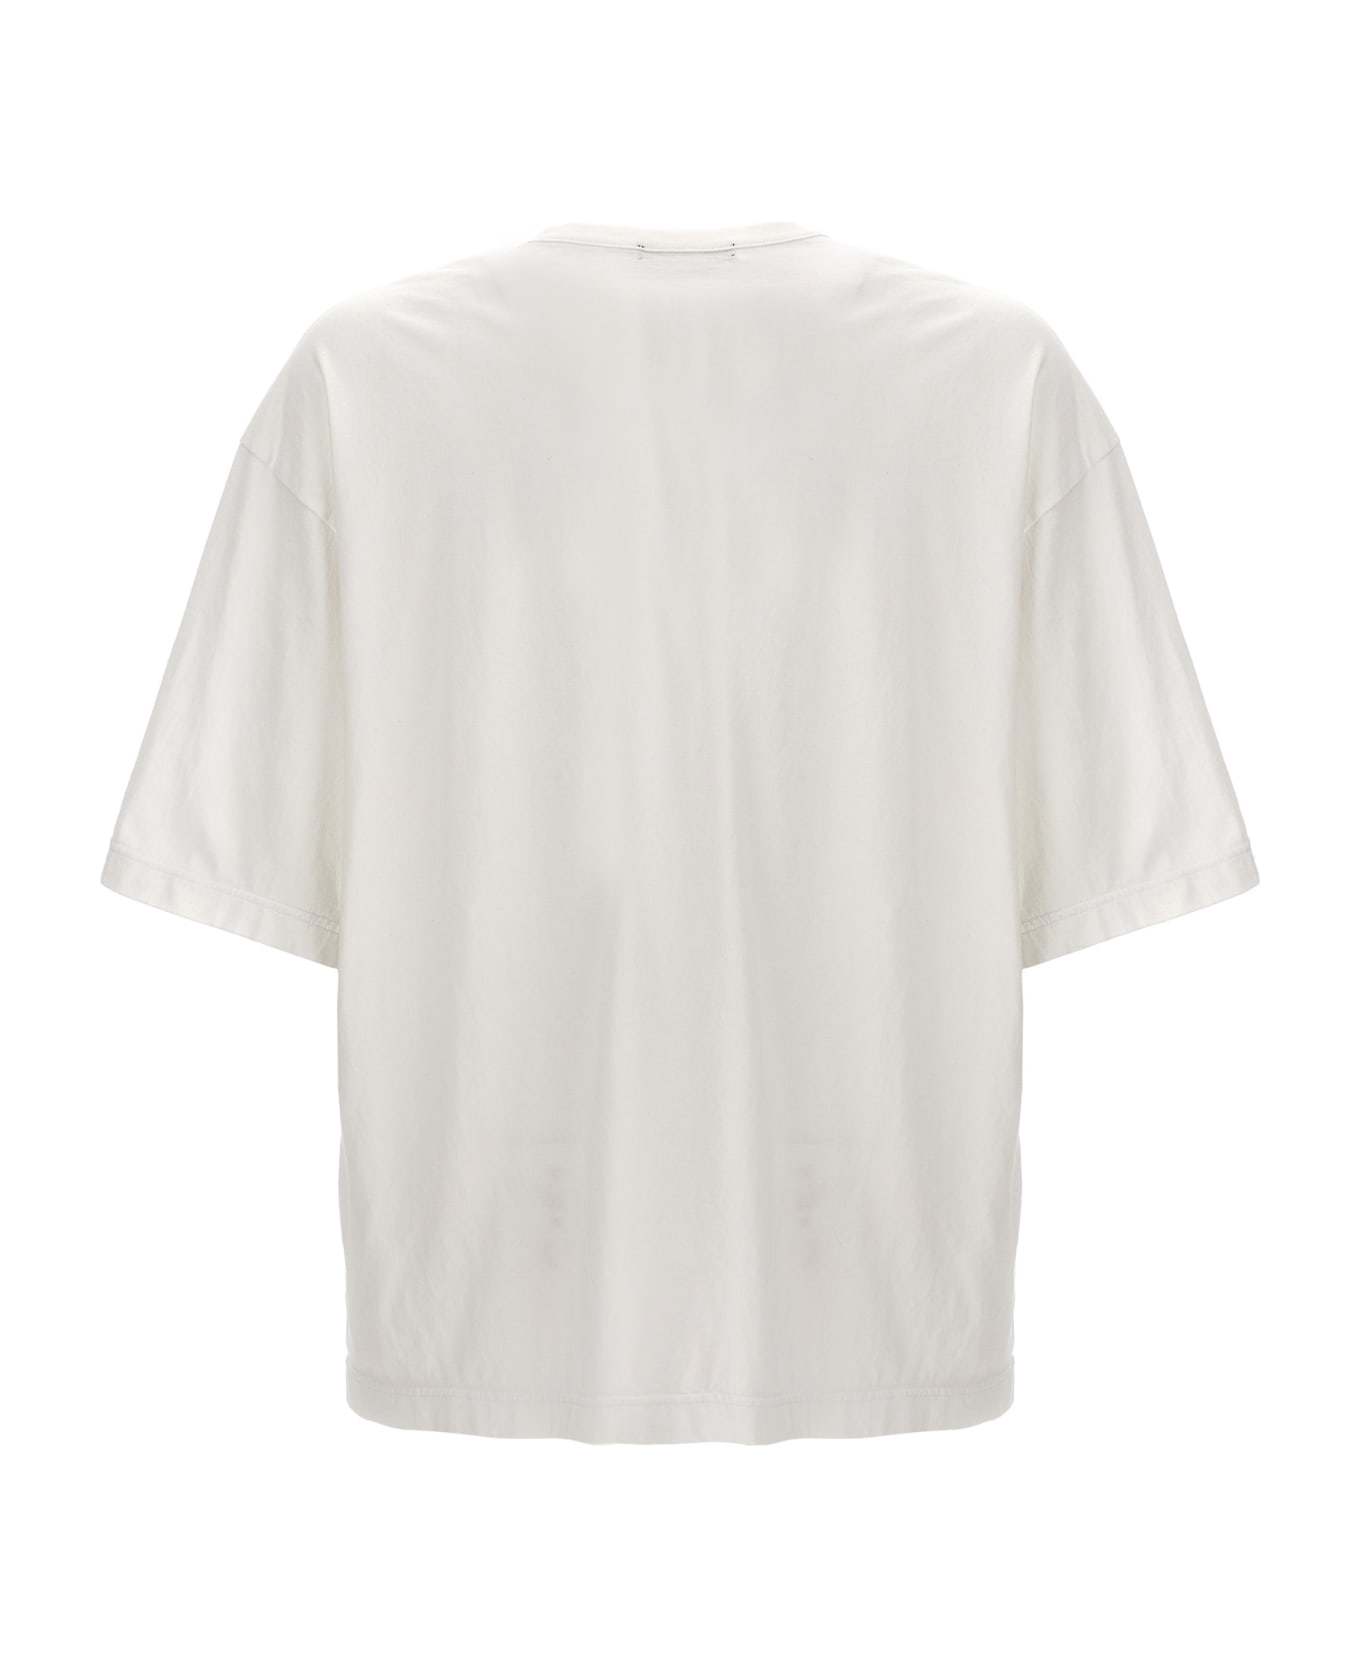 Undercover Jun Takahashi 'chaos And Balance' T-shirt - White